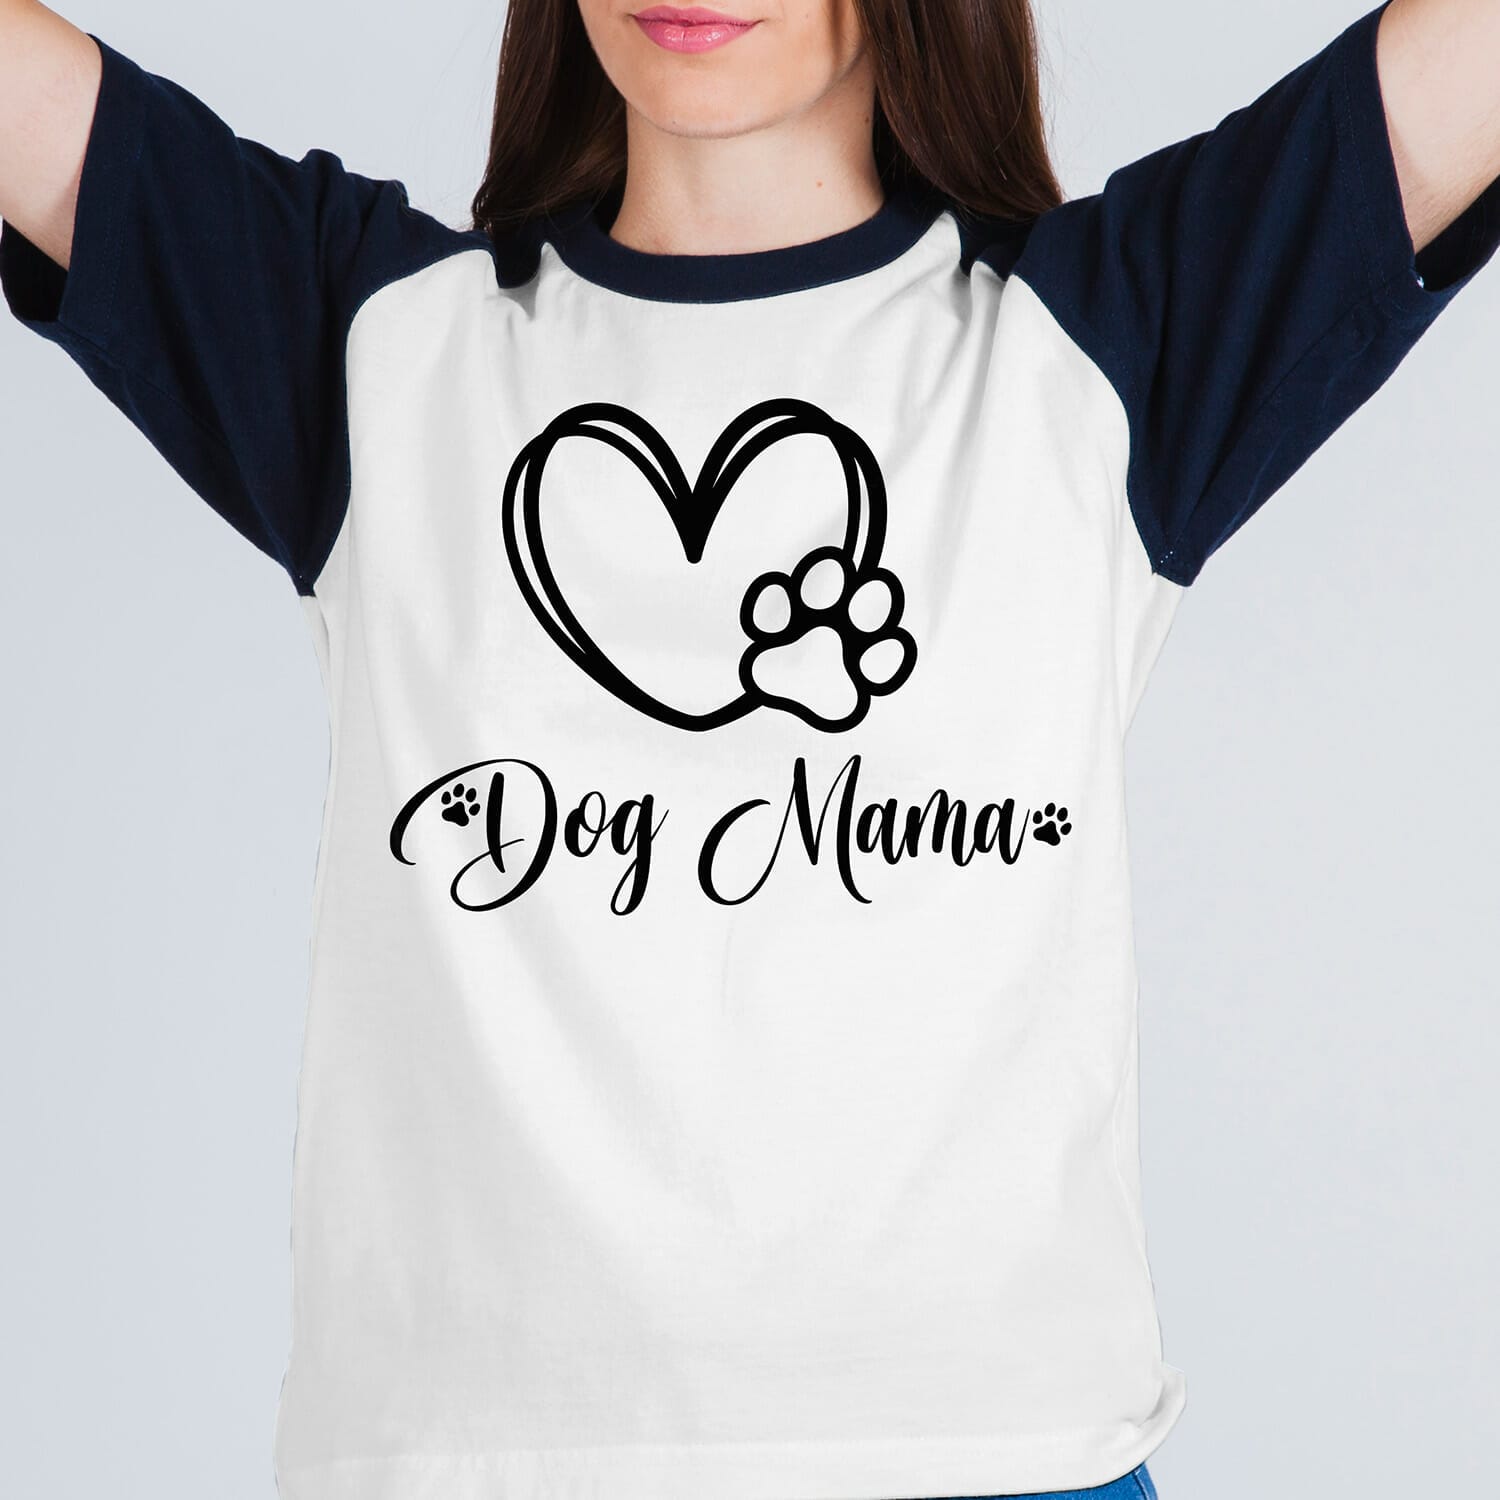 Dog mama Tshirt design